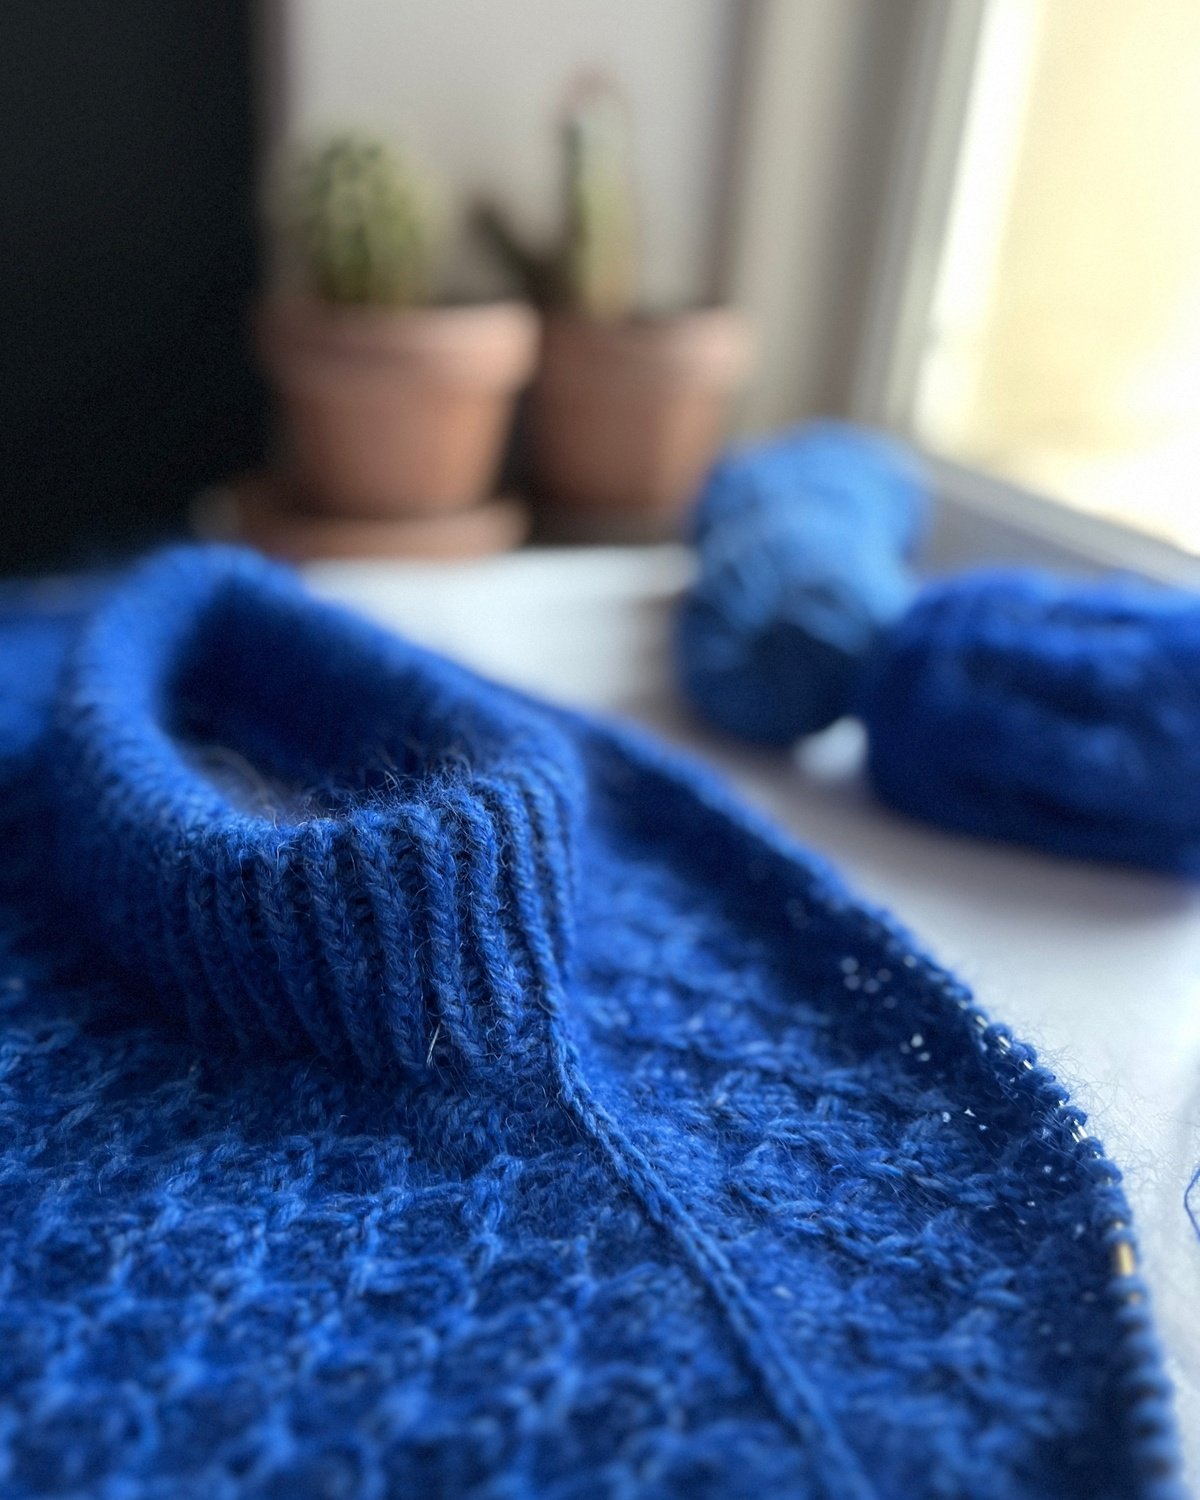 Formation Sweater Man English Popknit knitting pattern